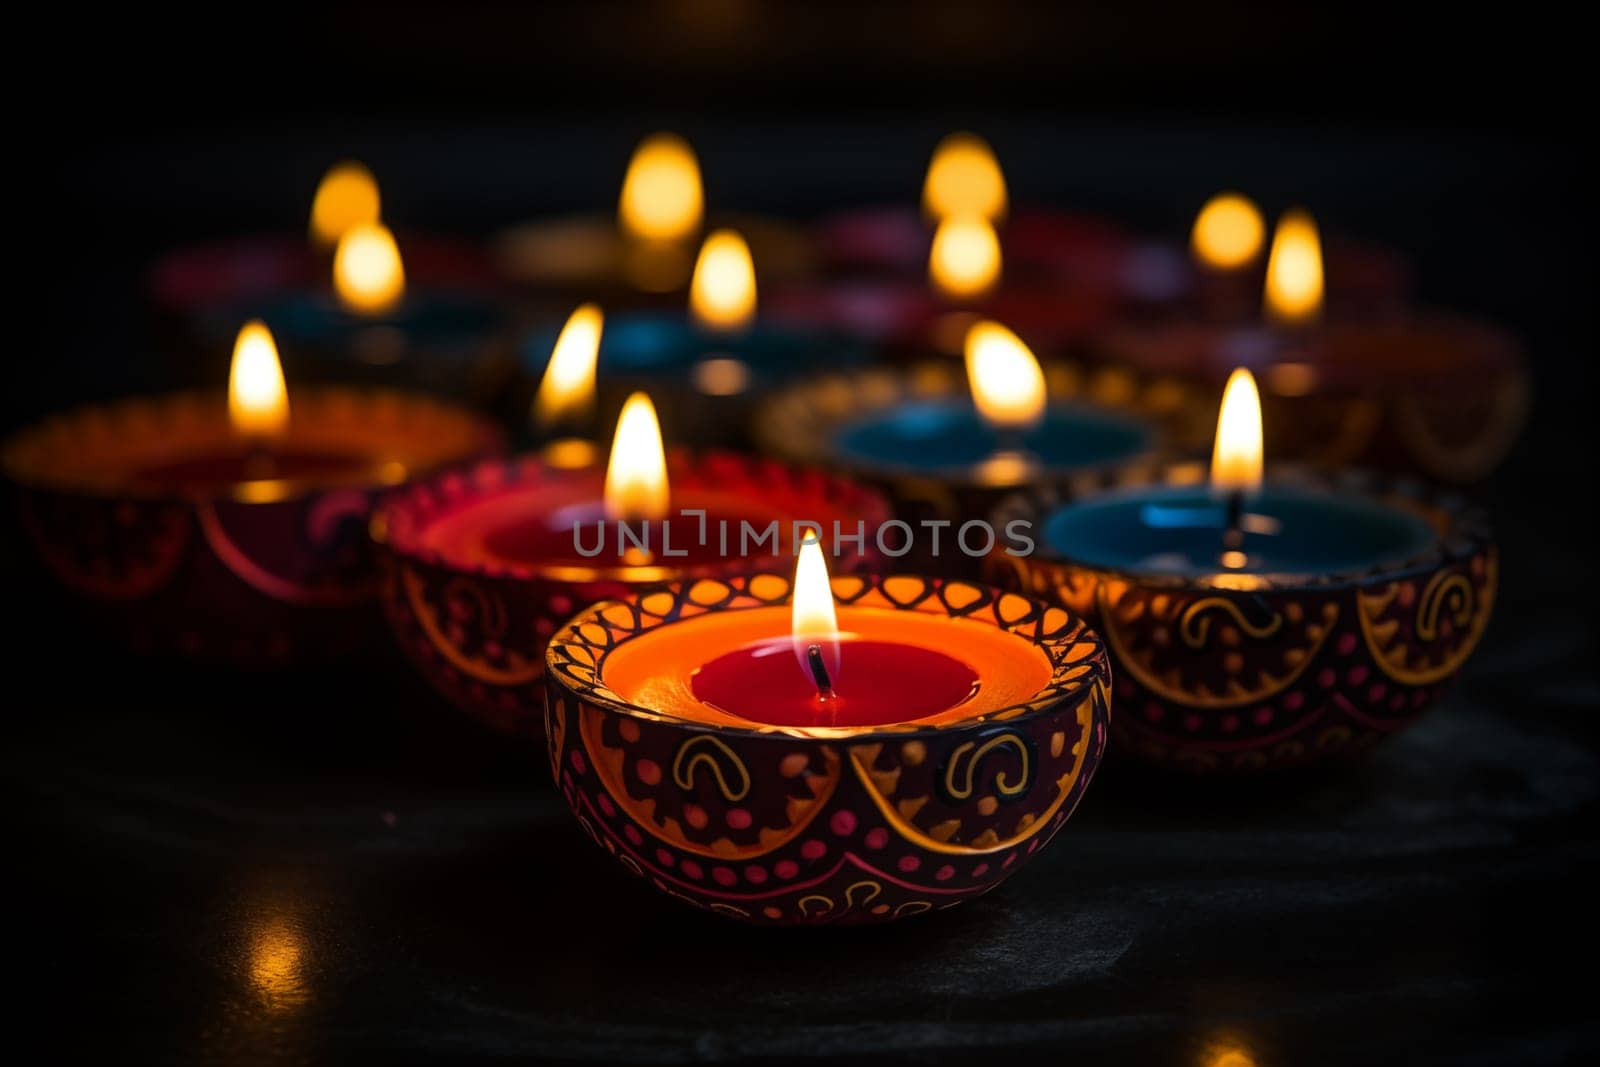 Diwali Festival - Burning Diya Lamps on a Decorated Table by dimol